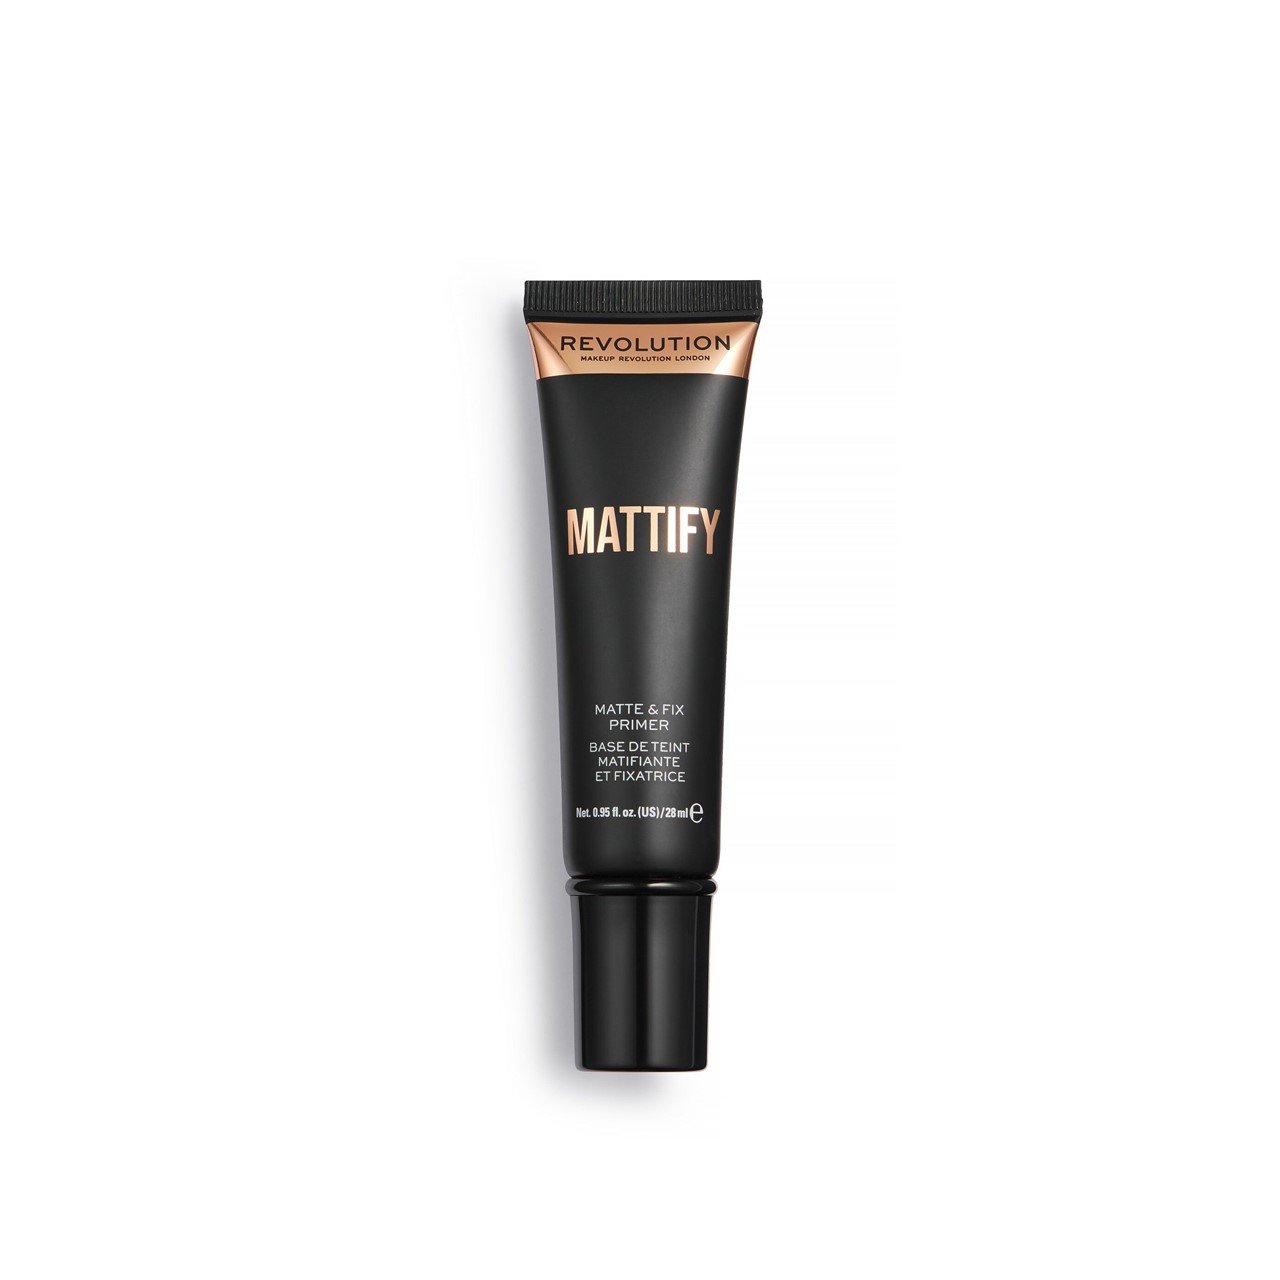 Makeup Revolution Mattify Primer 28ml (0.95fl oz)